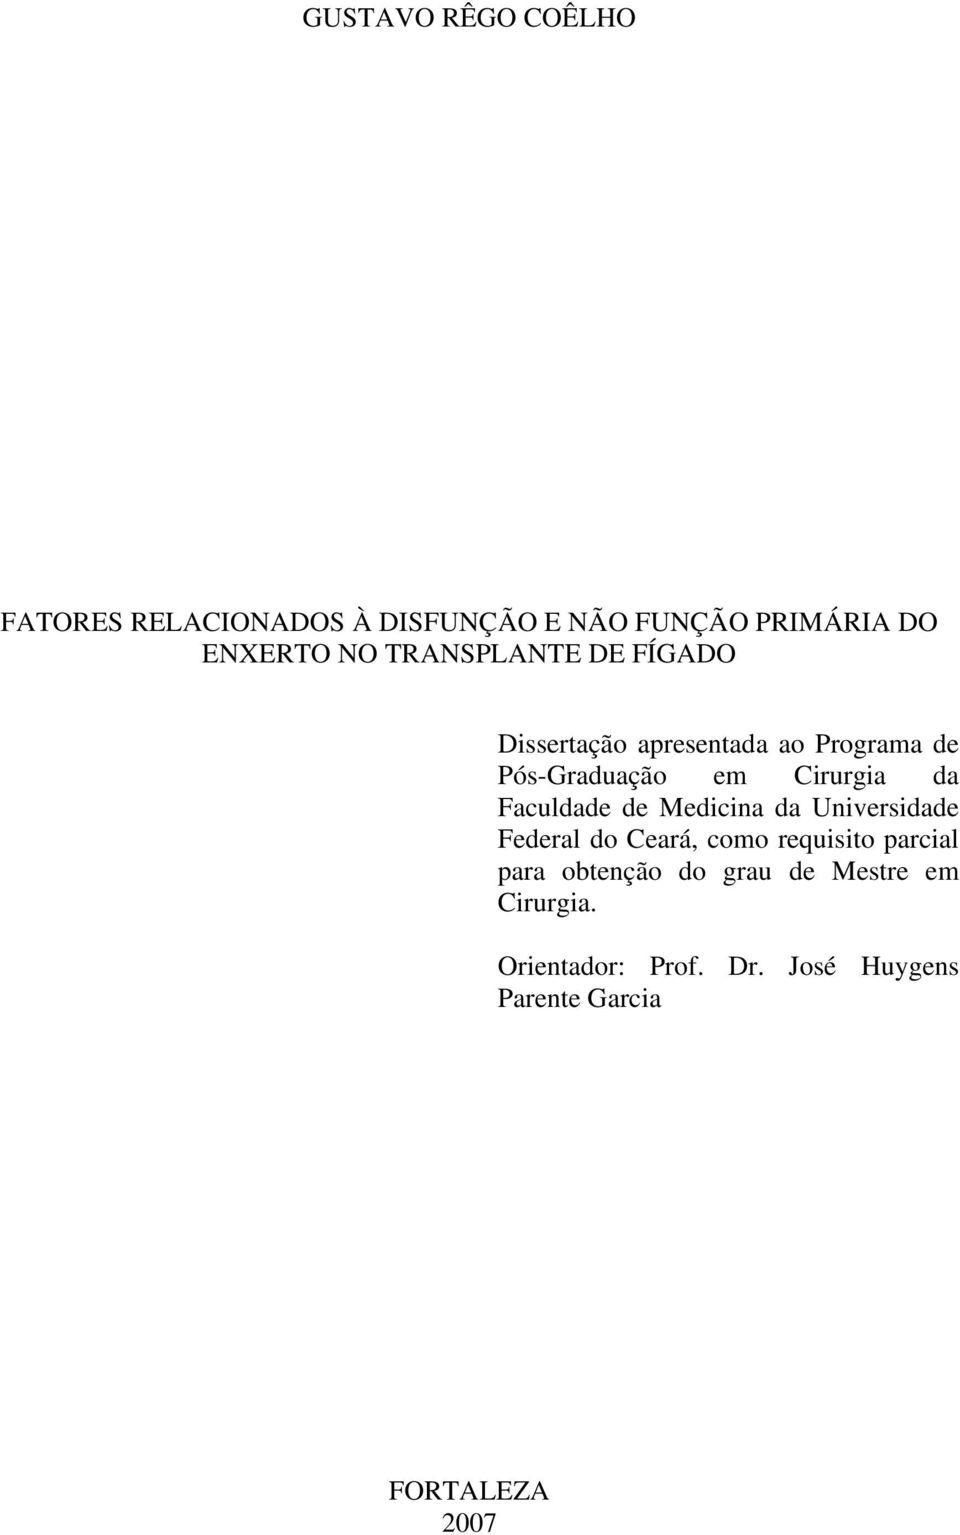 Faculdade de Medicina da Universidade Federal do Ceará, como requisito parcial para